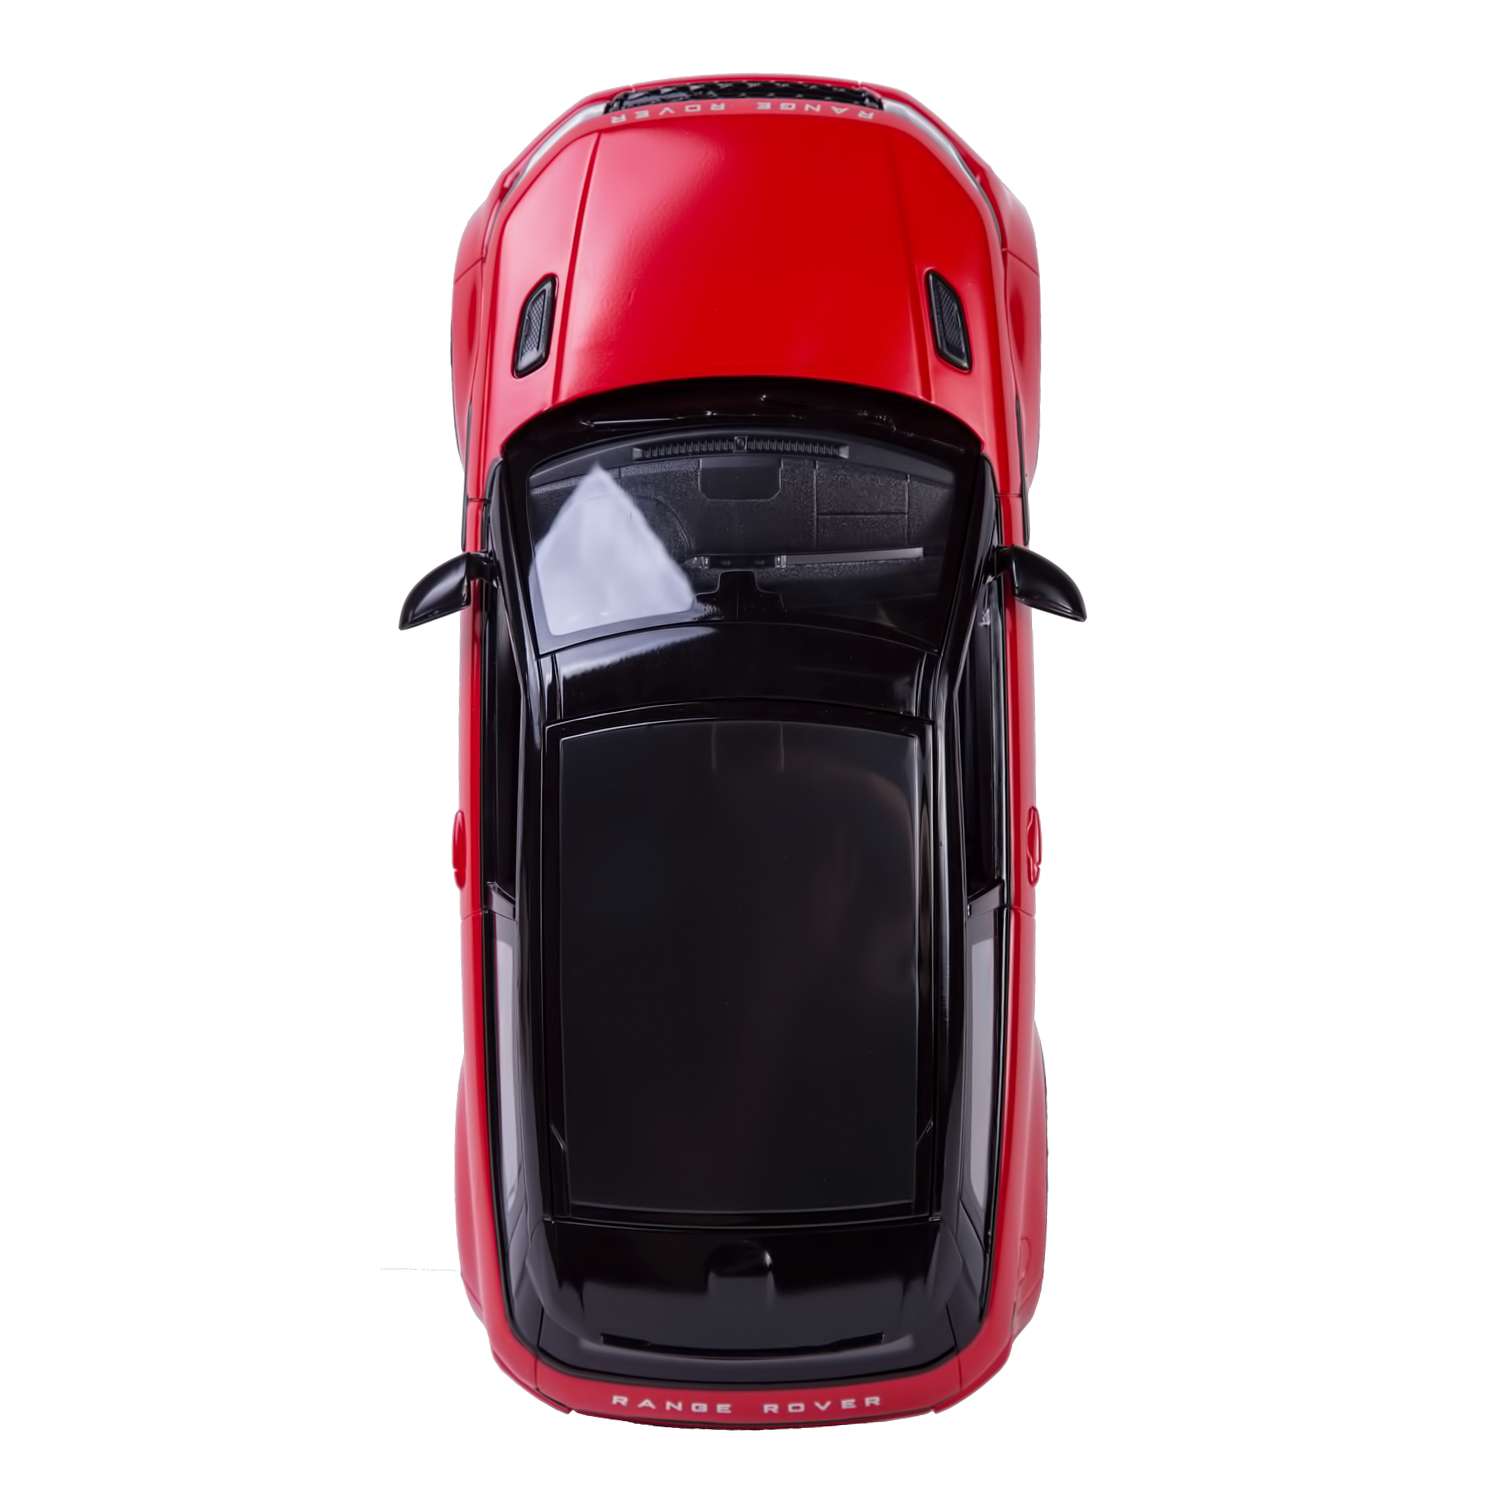 Машинка р/у Rastar Range Rover Evoque 1:14 красная - фото 9